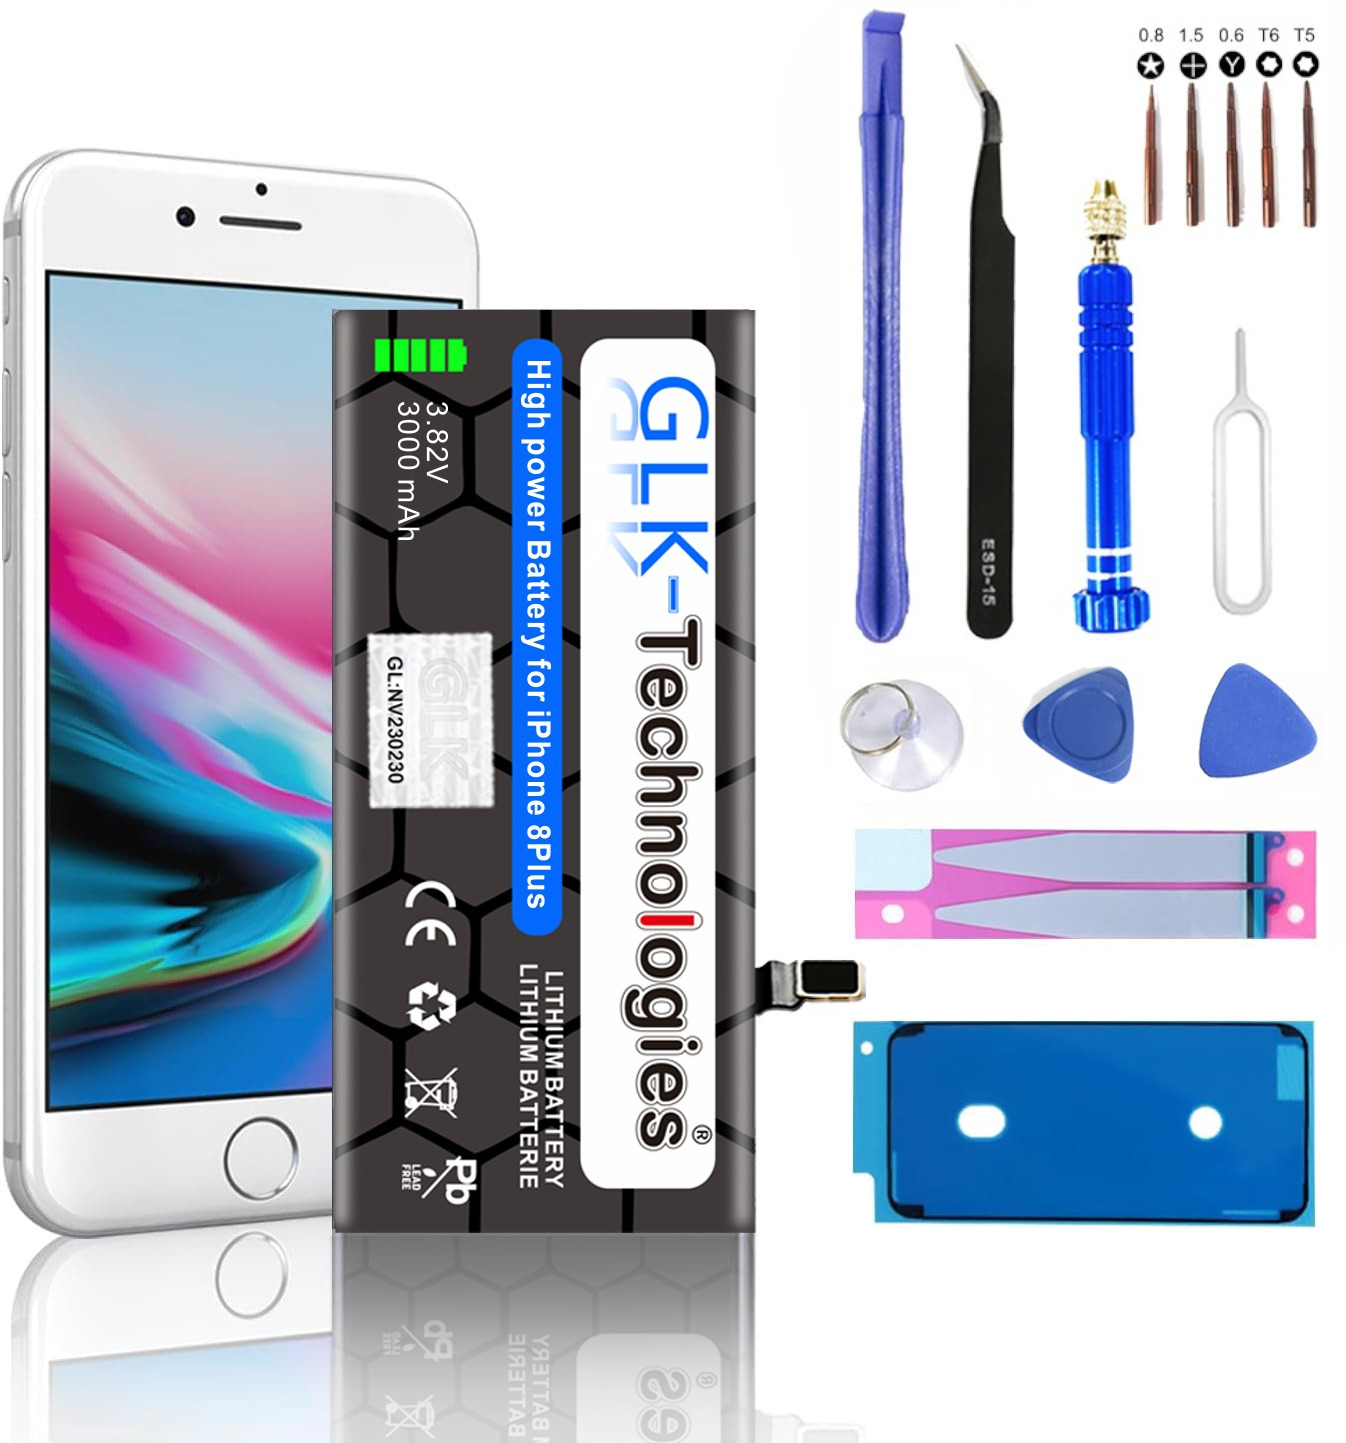 GLK-TECHNOLOGIES iPhone 8 Plus inkl. Akku Werkzeug Lithium-Ionen-Akku Smartphone Ersatz